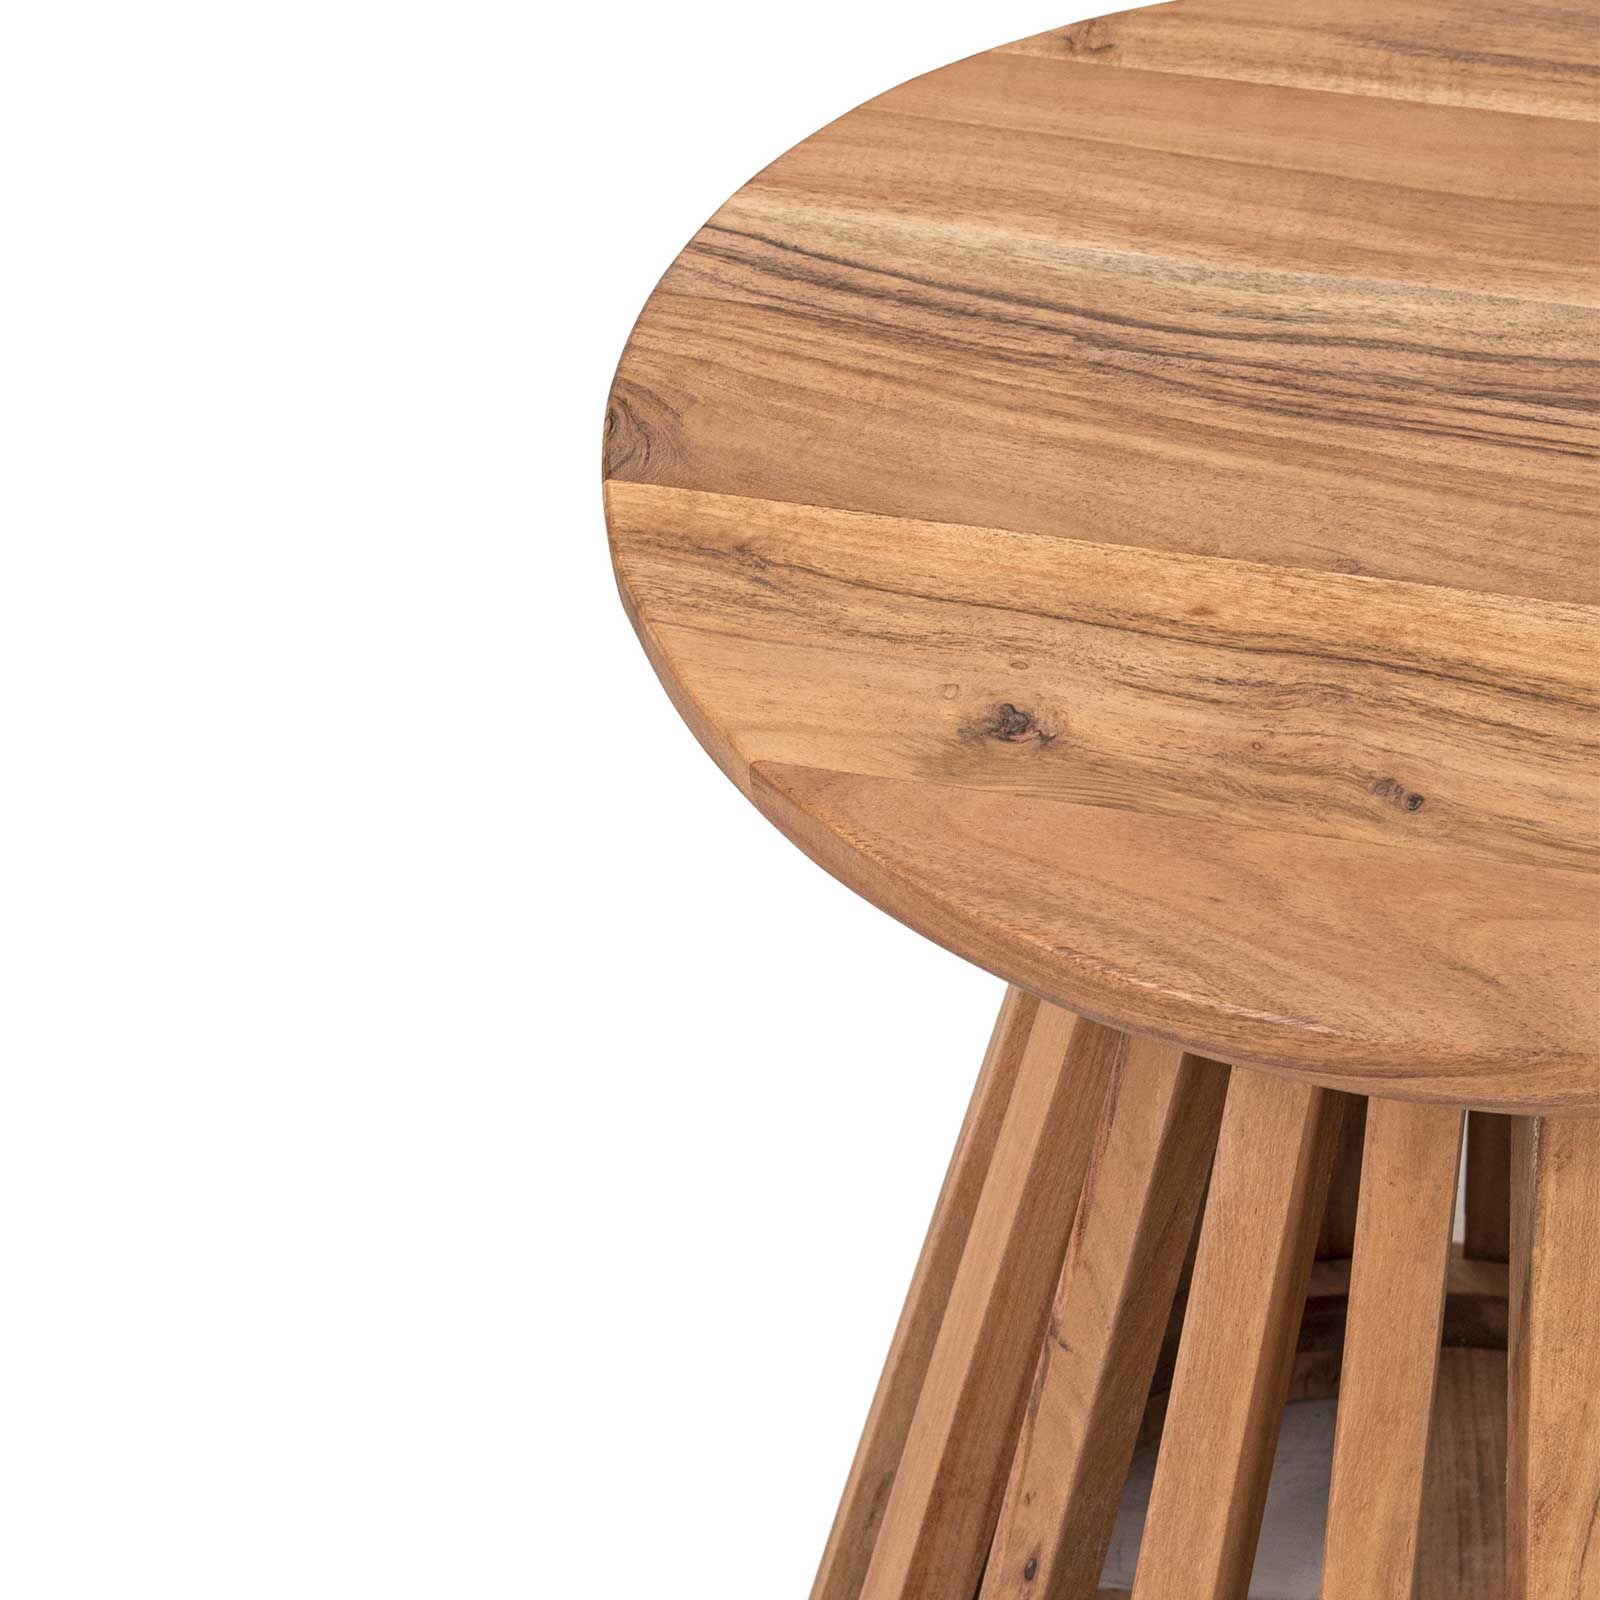 Table d'appoint ronde bois massif | Acacia Kfir